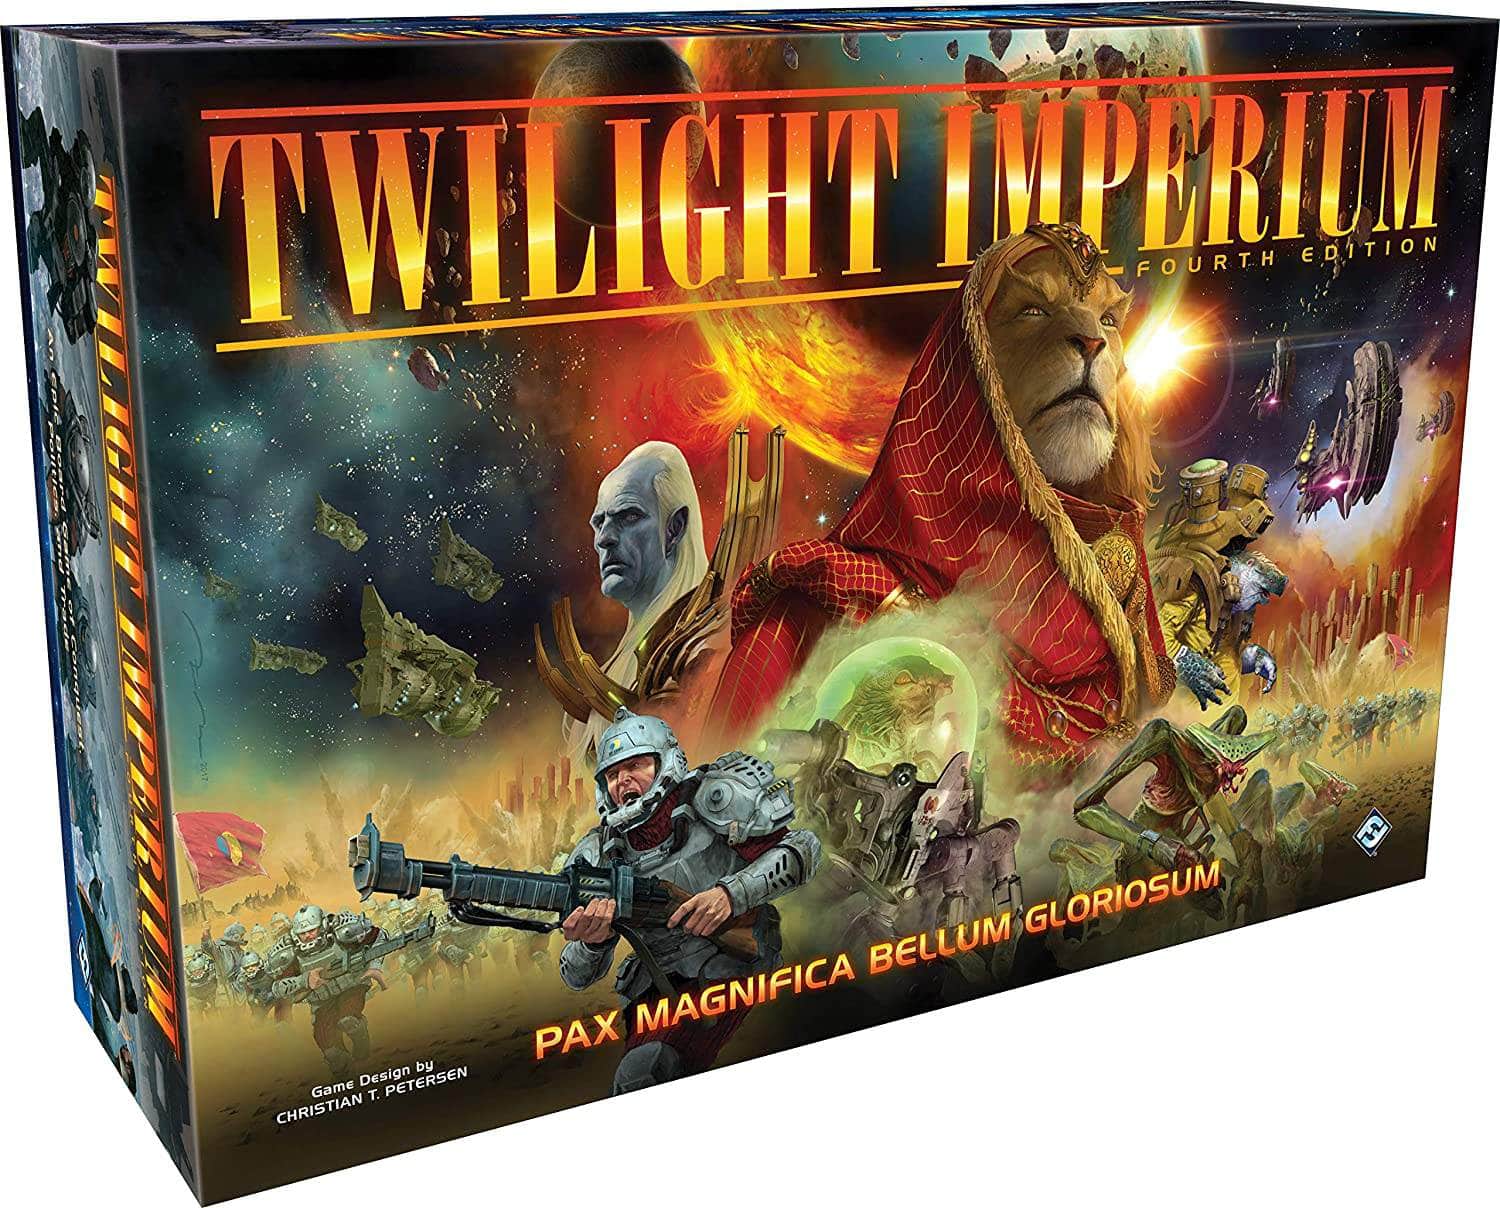 Twilight Imperium: Παιχνίδι επιτραπέζιου παιχνιδιού τέταρτης έκδοσης (Retail Pre-Order Edition) Fantasy Flight Games KS001065A